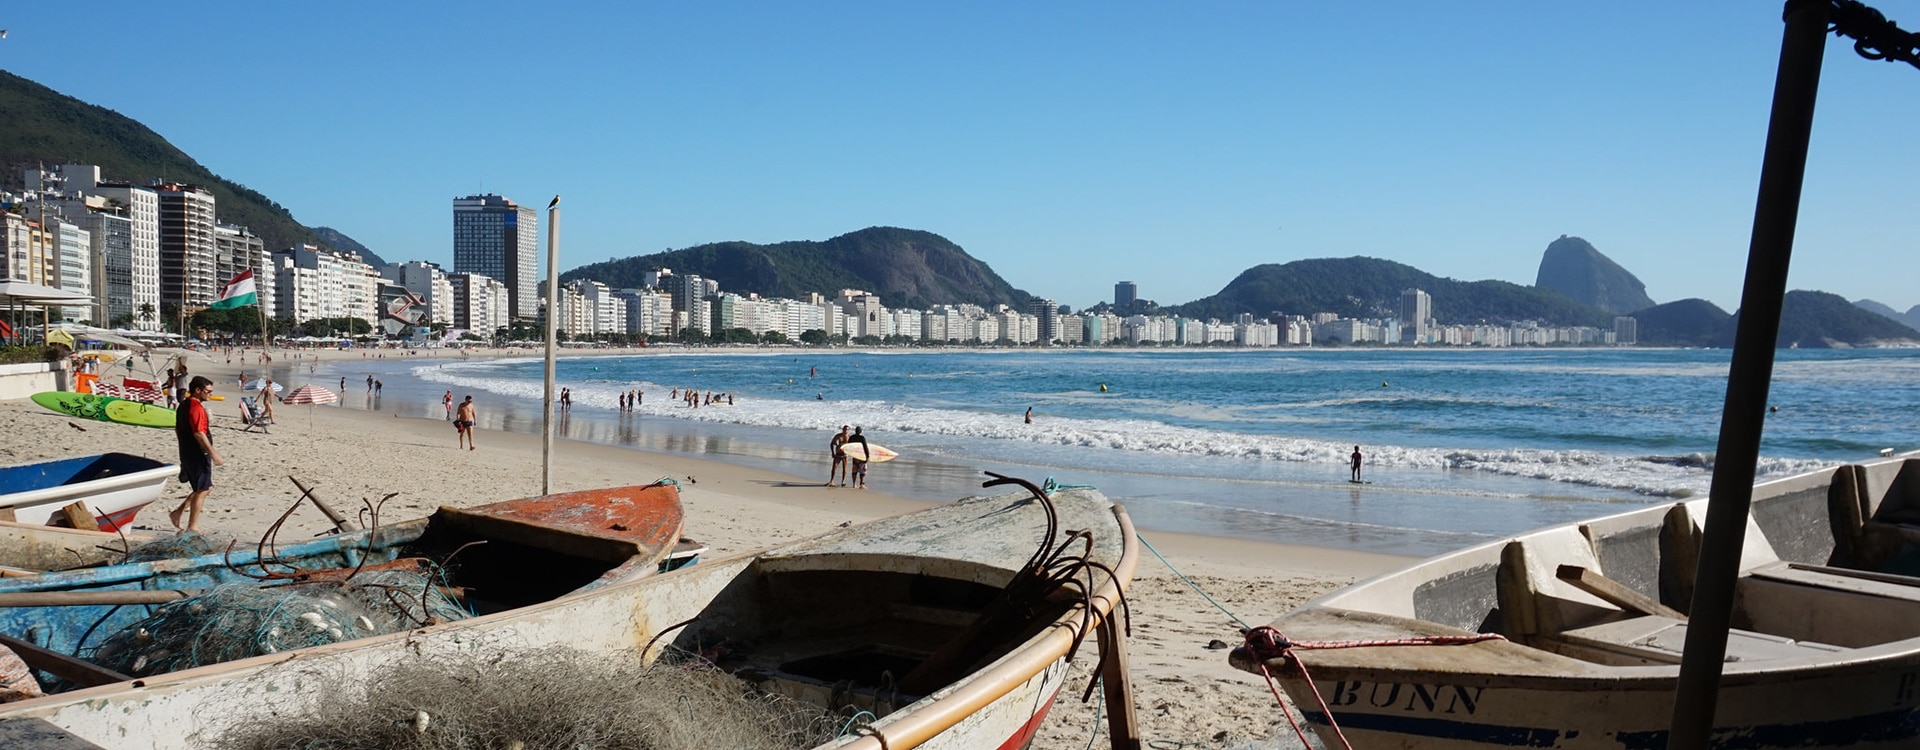 Copacabana Bresil Rio de Janeiro plage